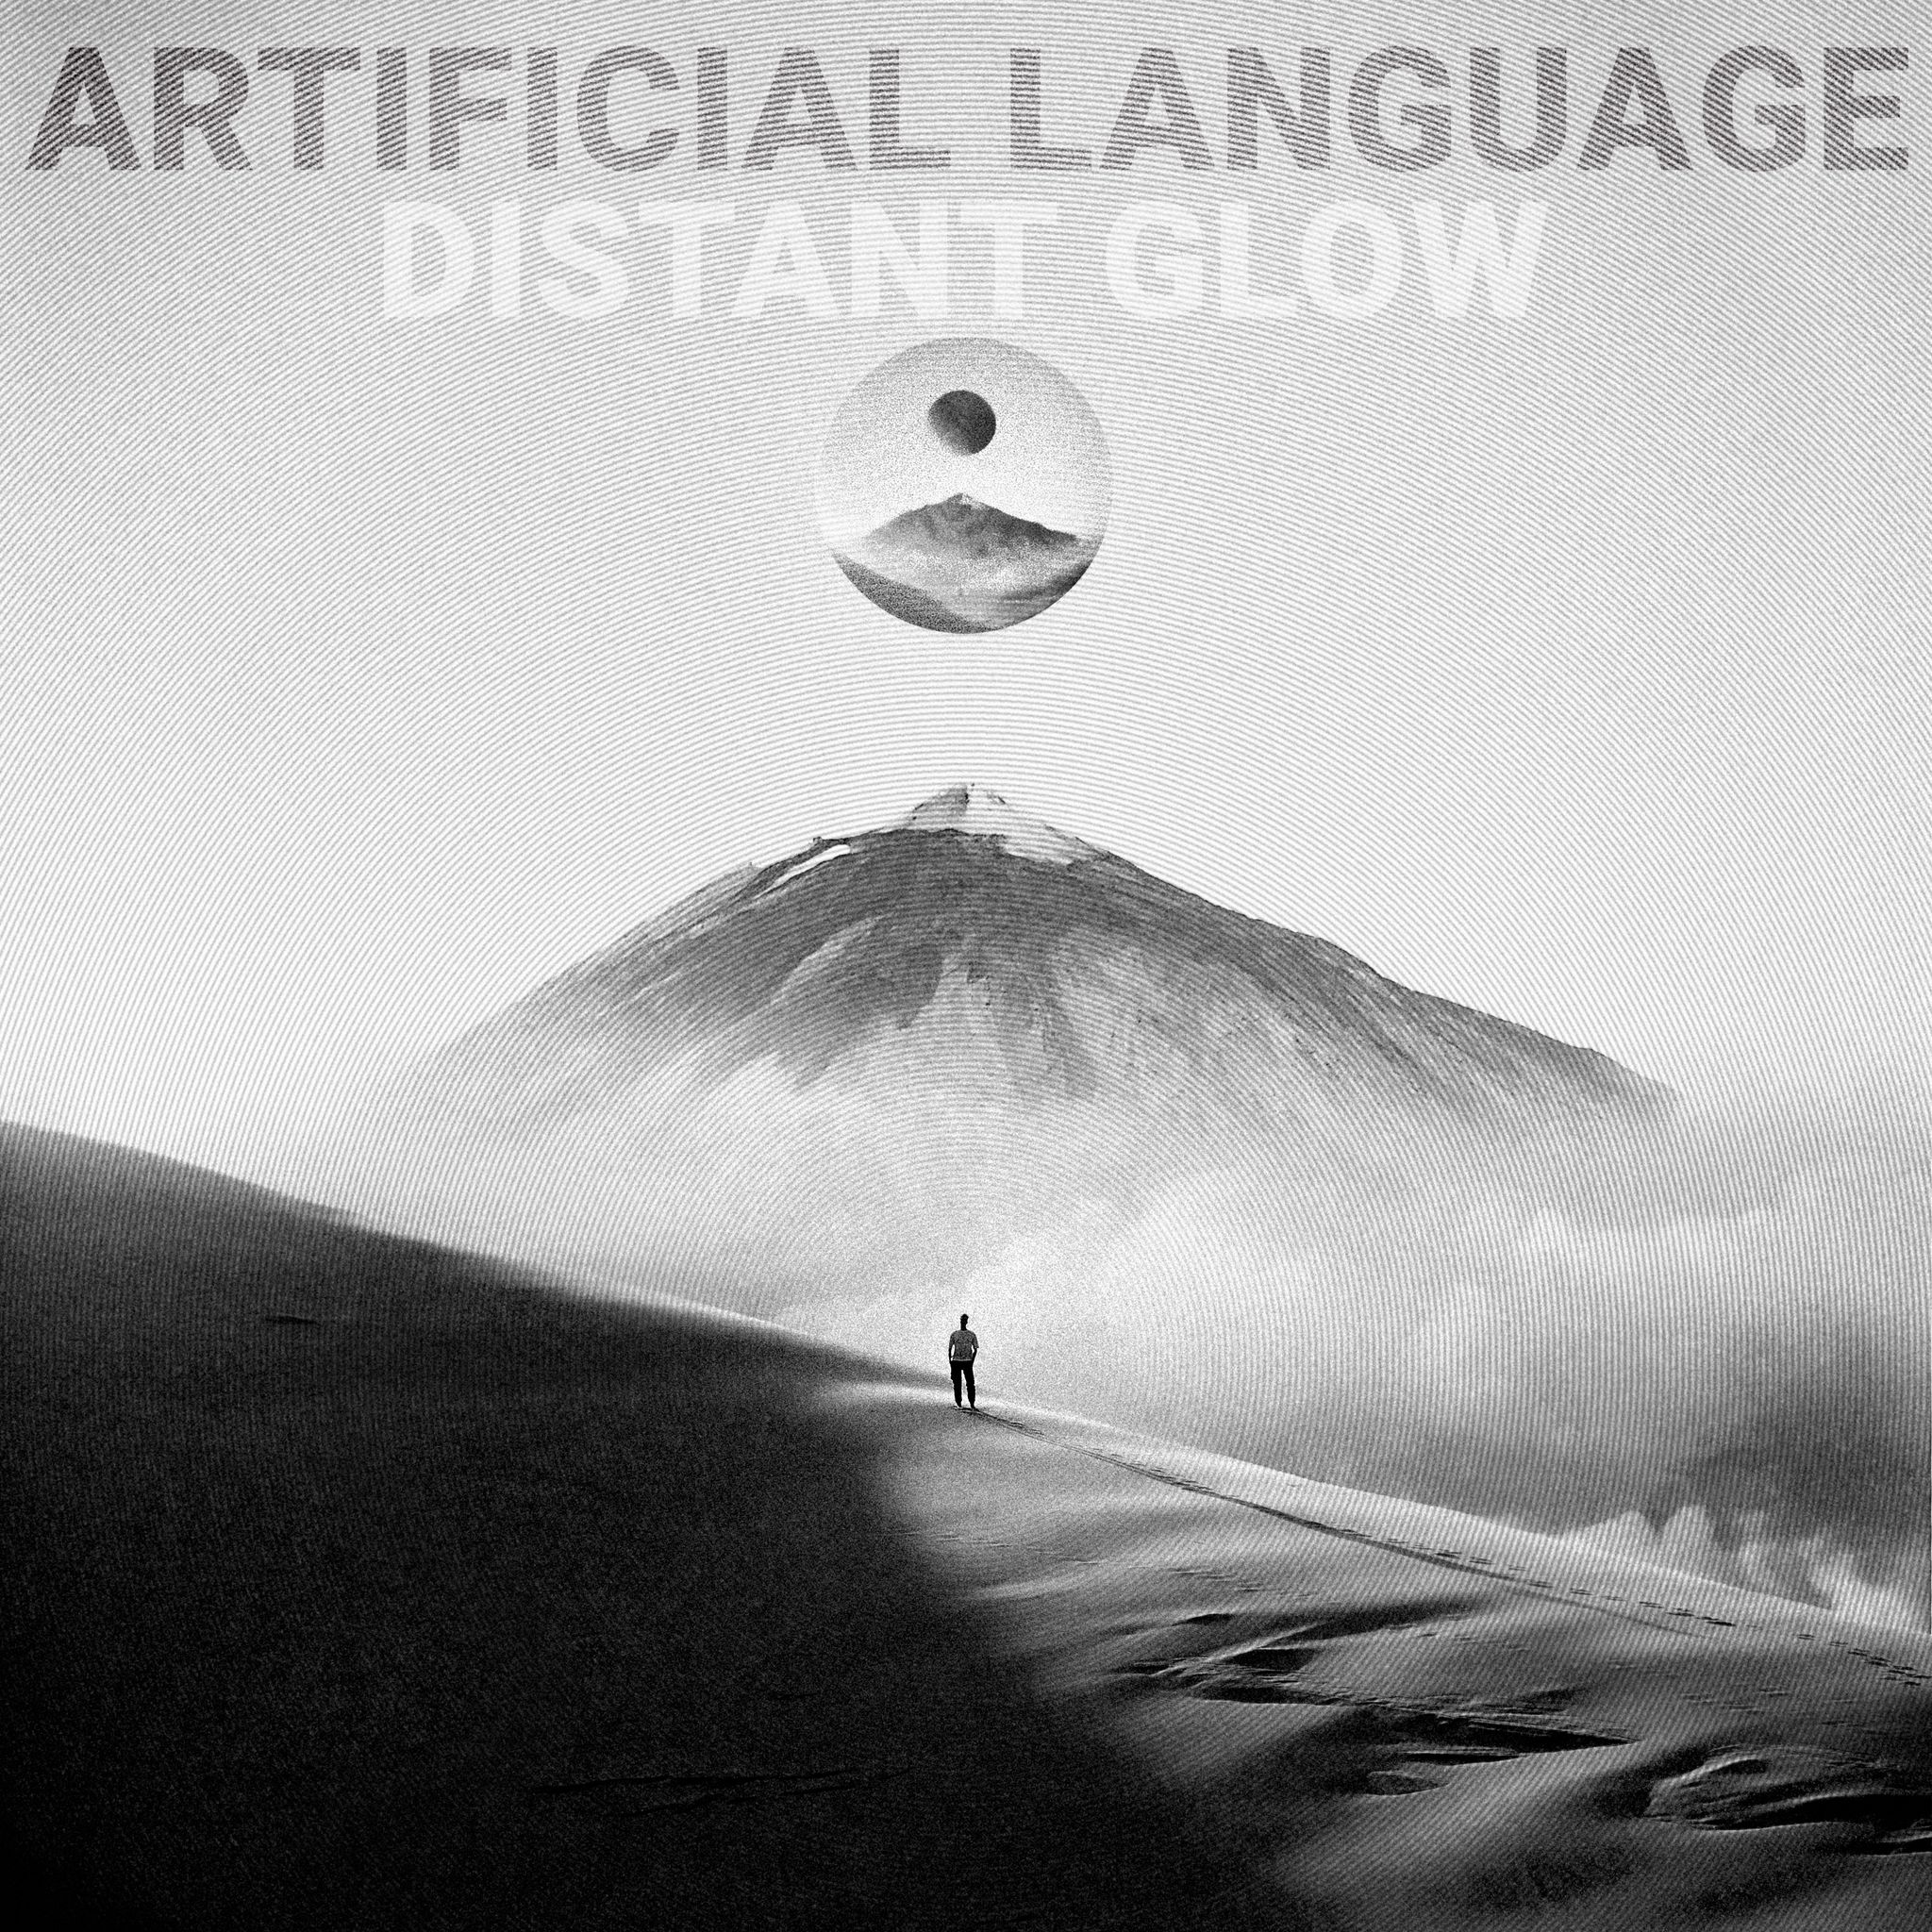 Distant-Glow-Artificial-Language.jpg